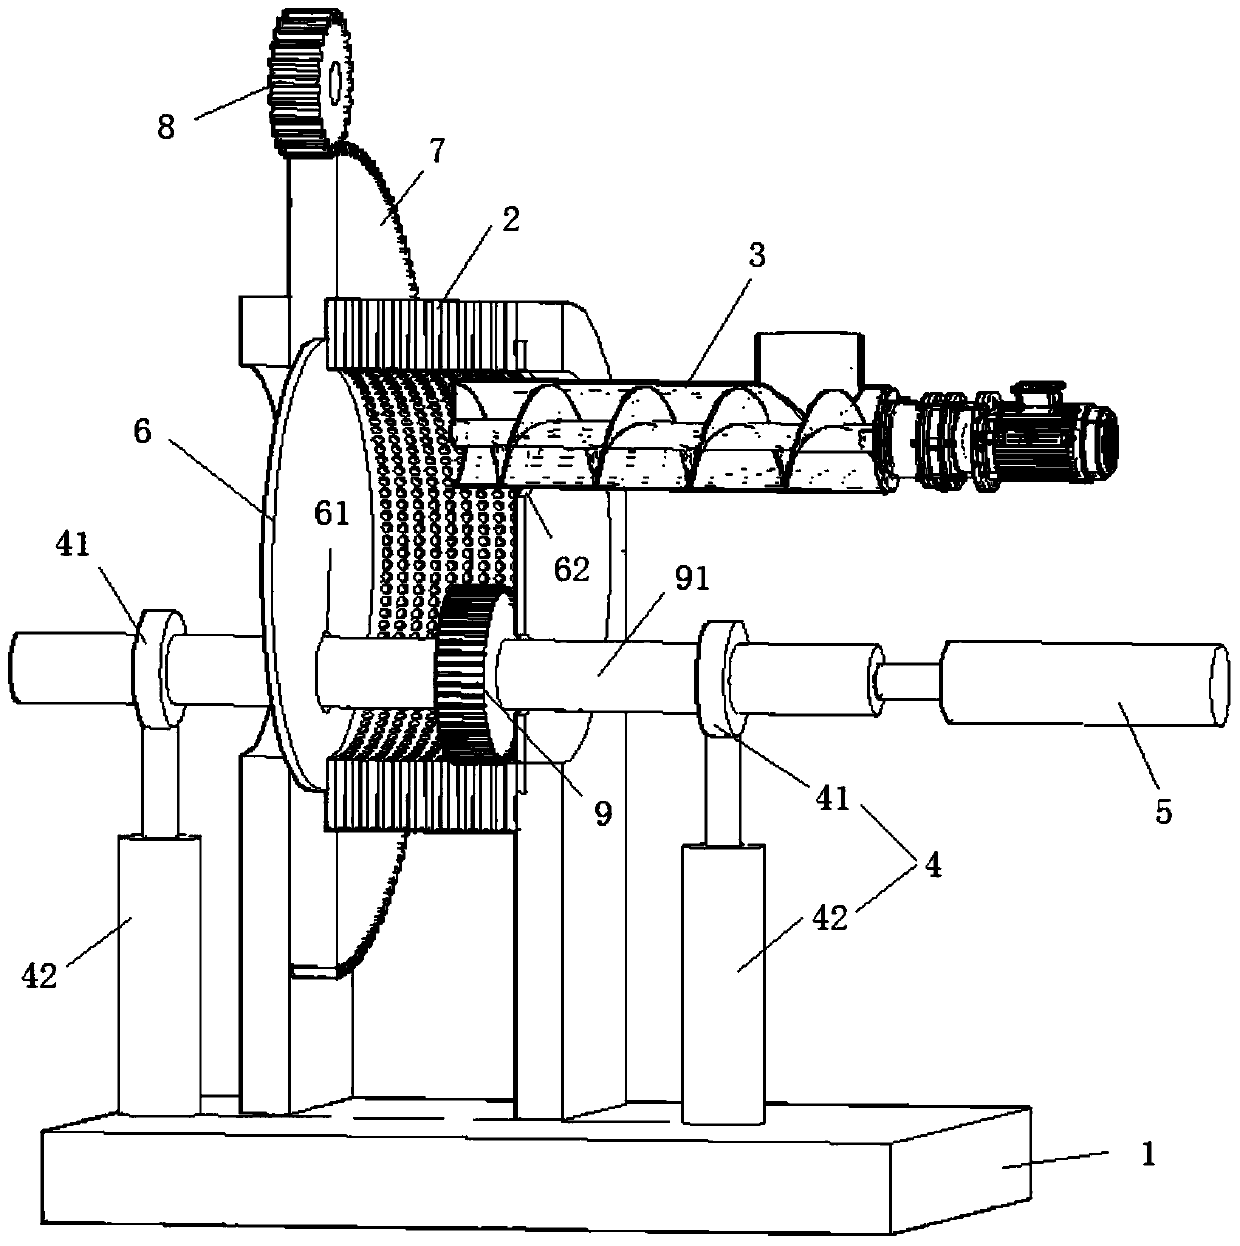 A pressure roller mobile granulator